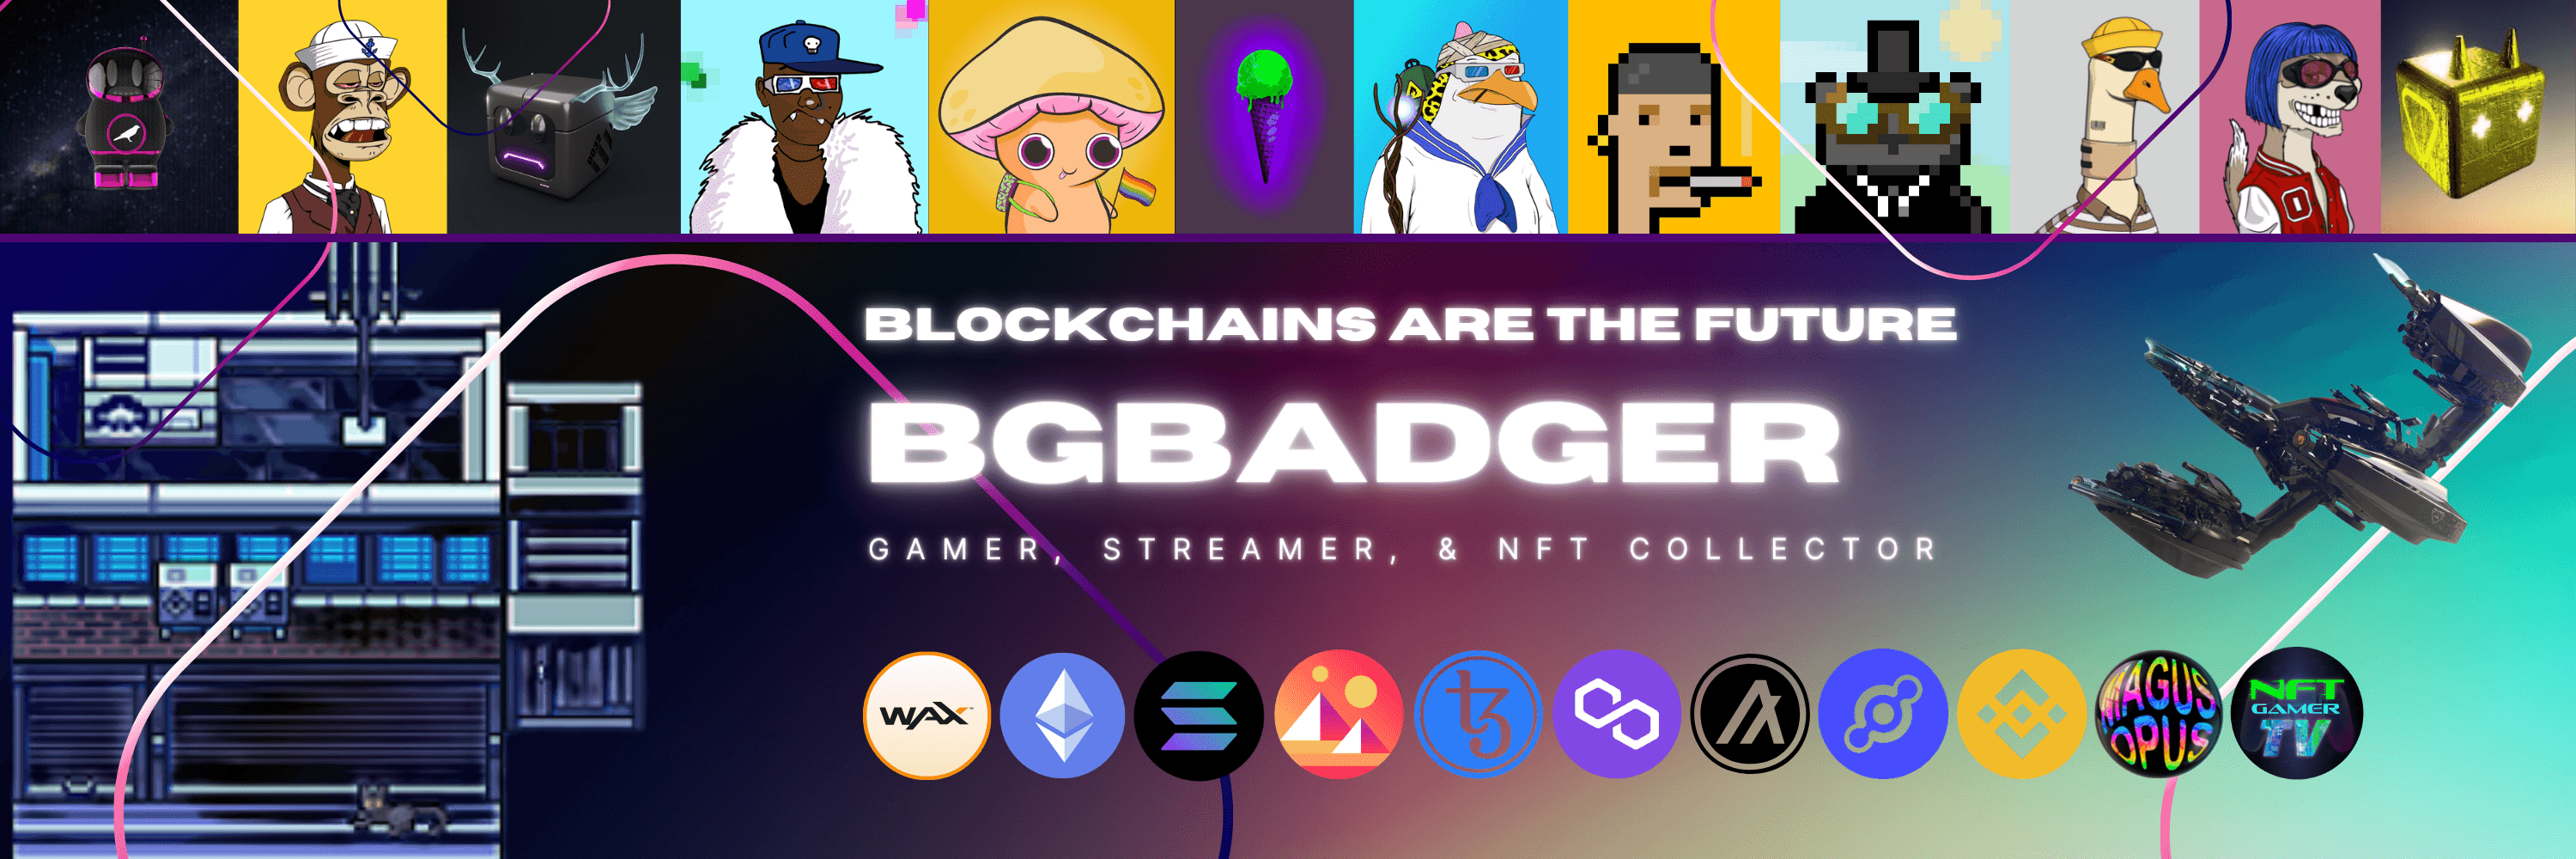 BGBadger banner